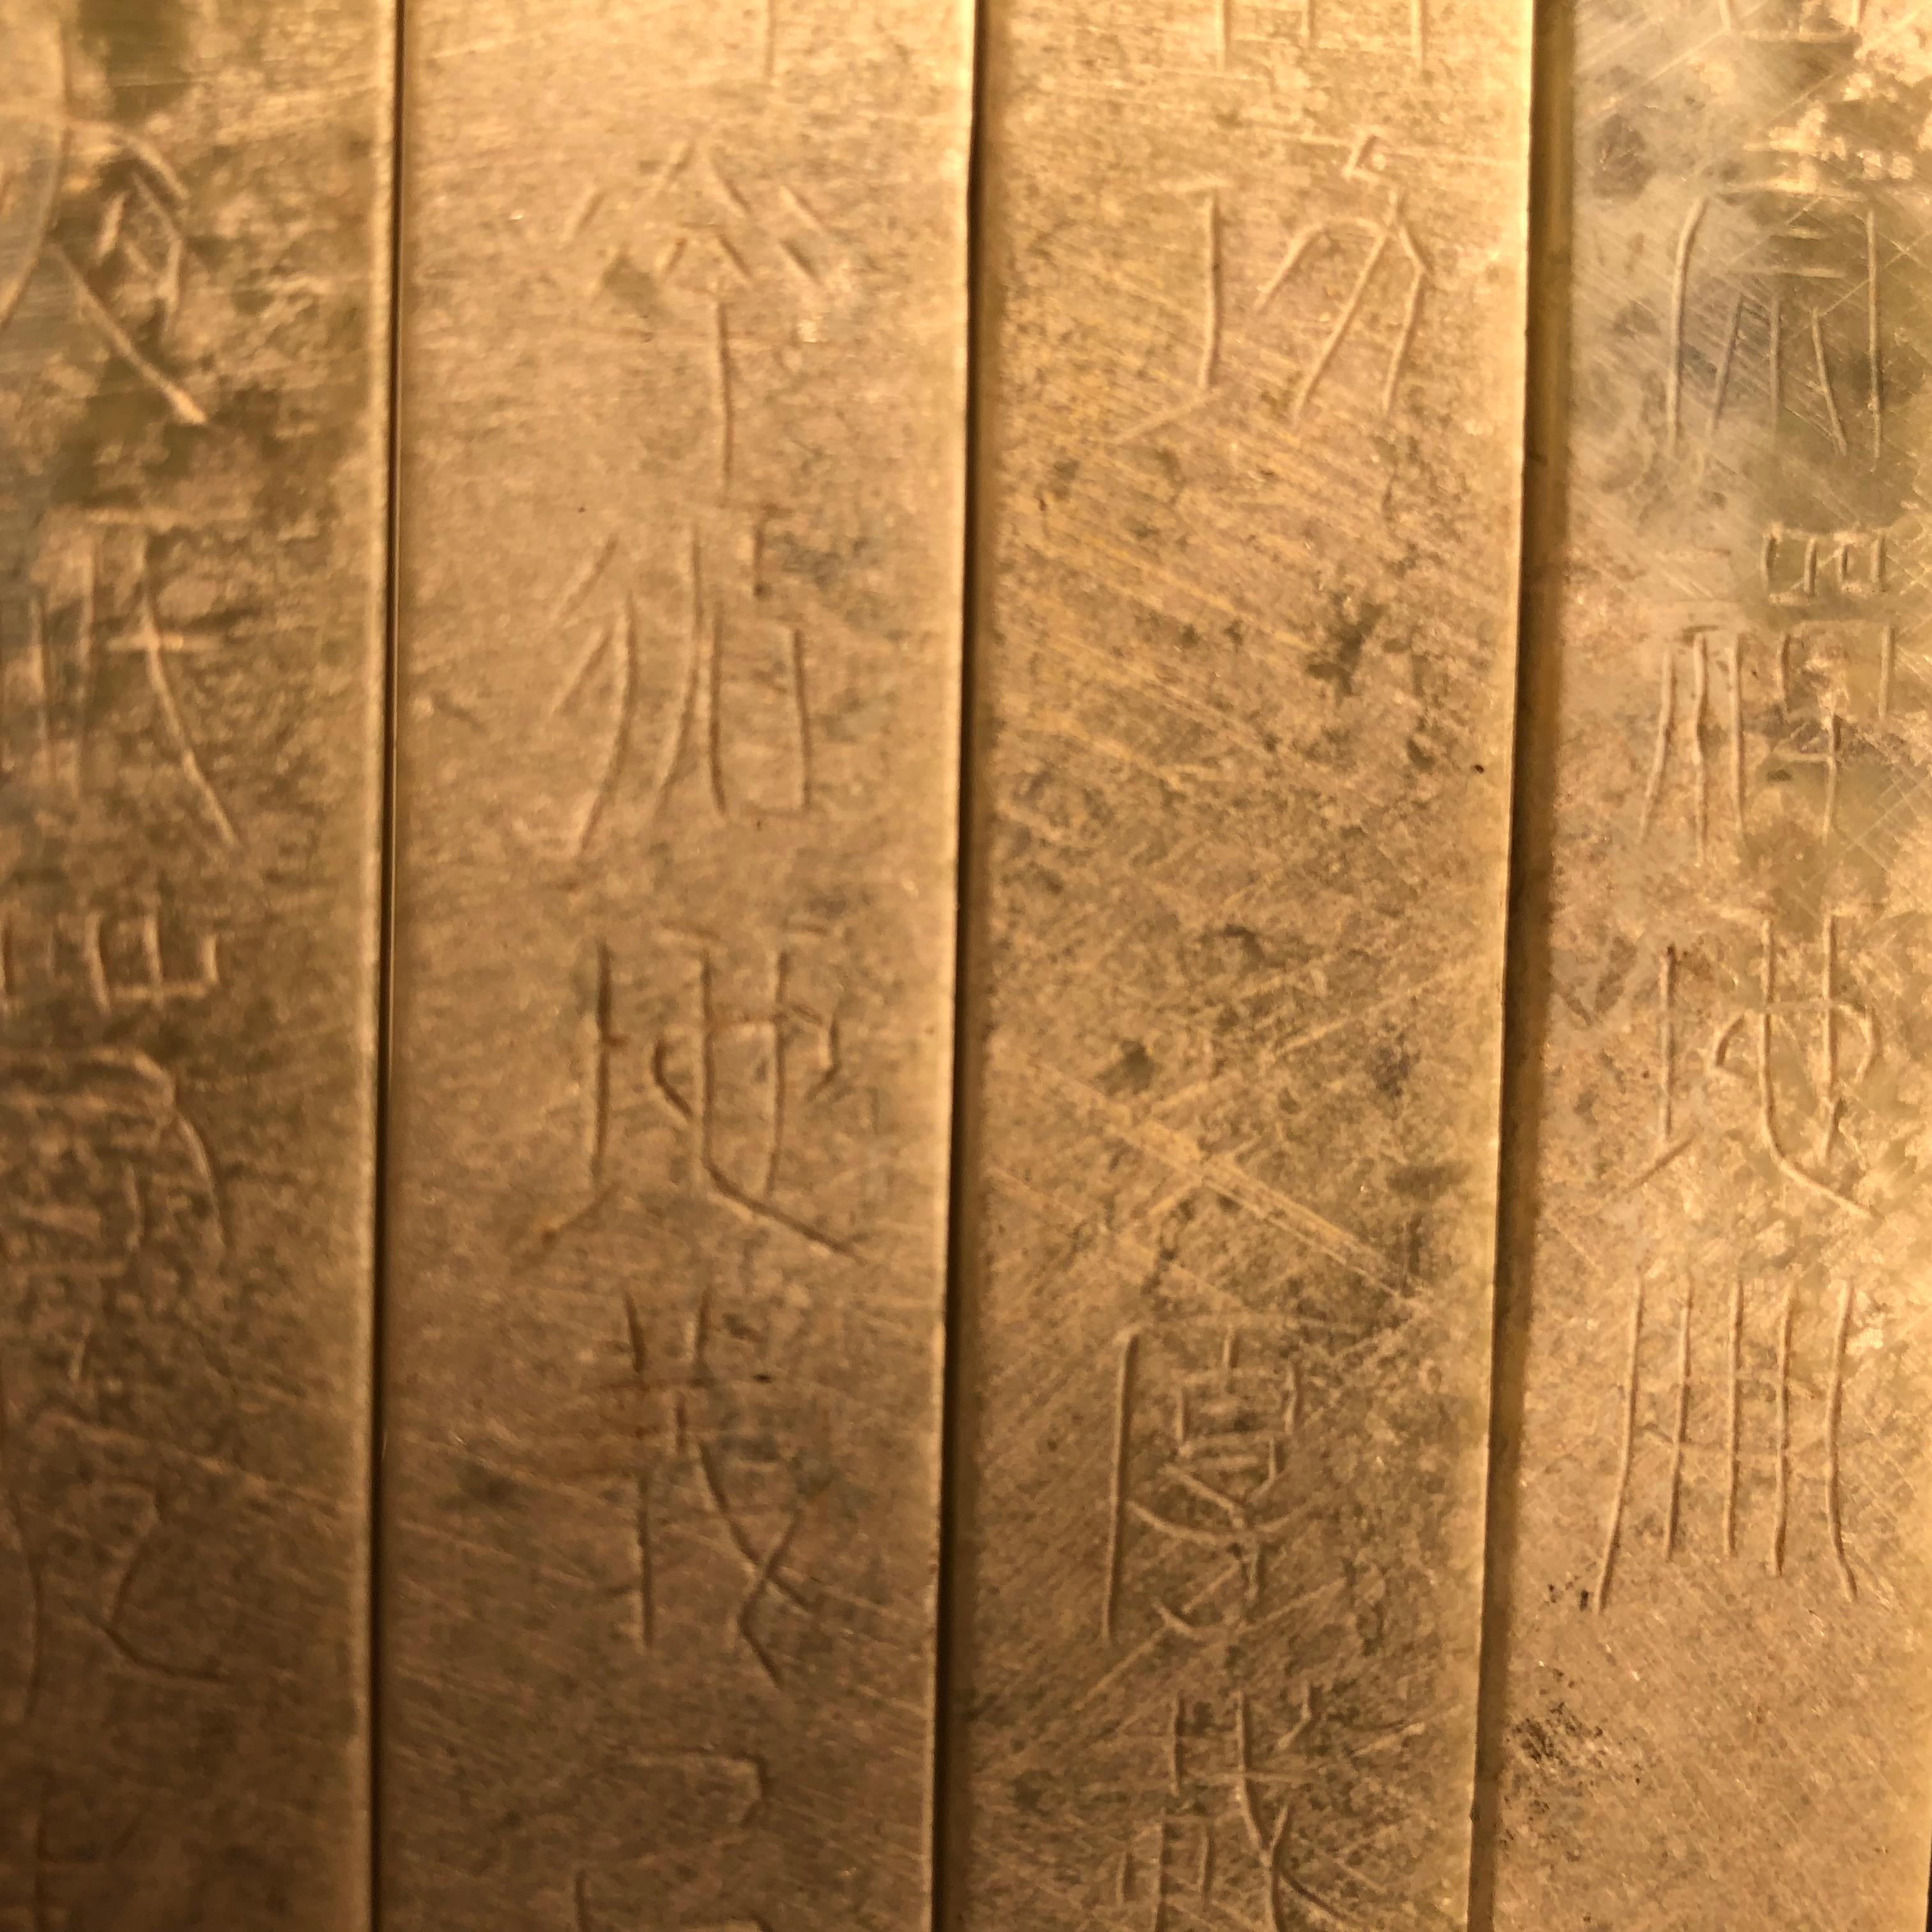 China Ancient Jade Set Four Engraved Tablets, 475-221 BC 3